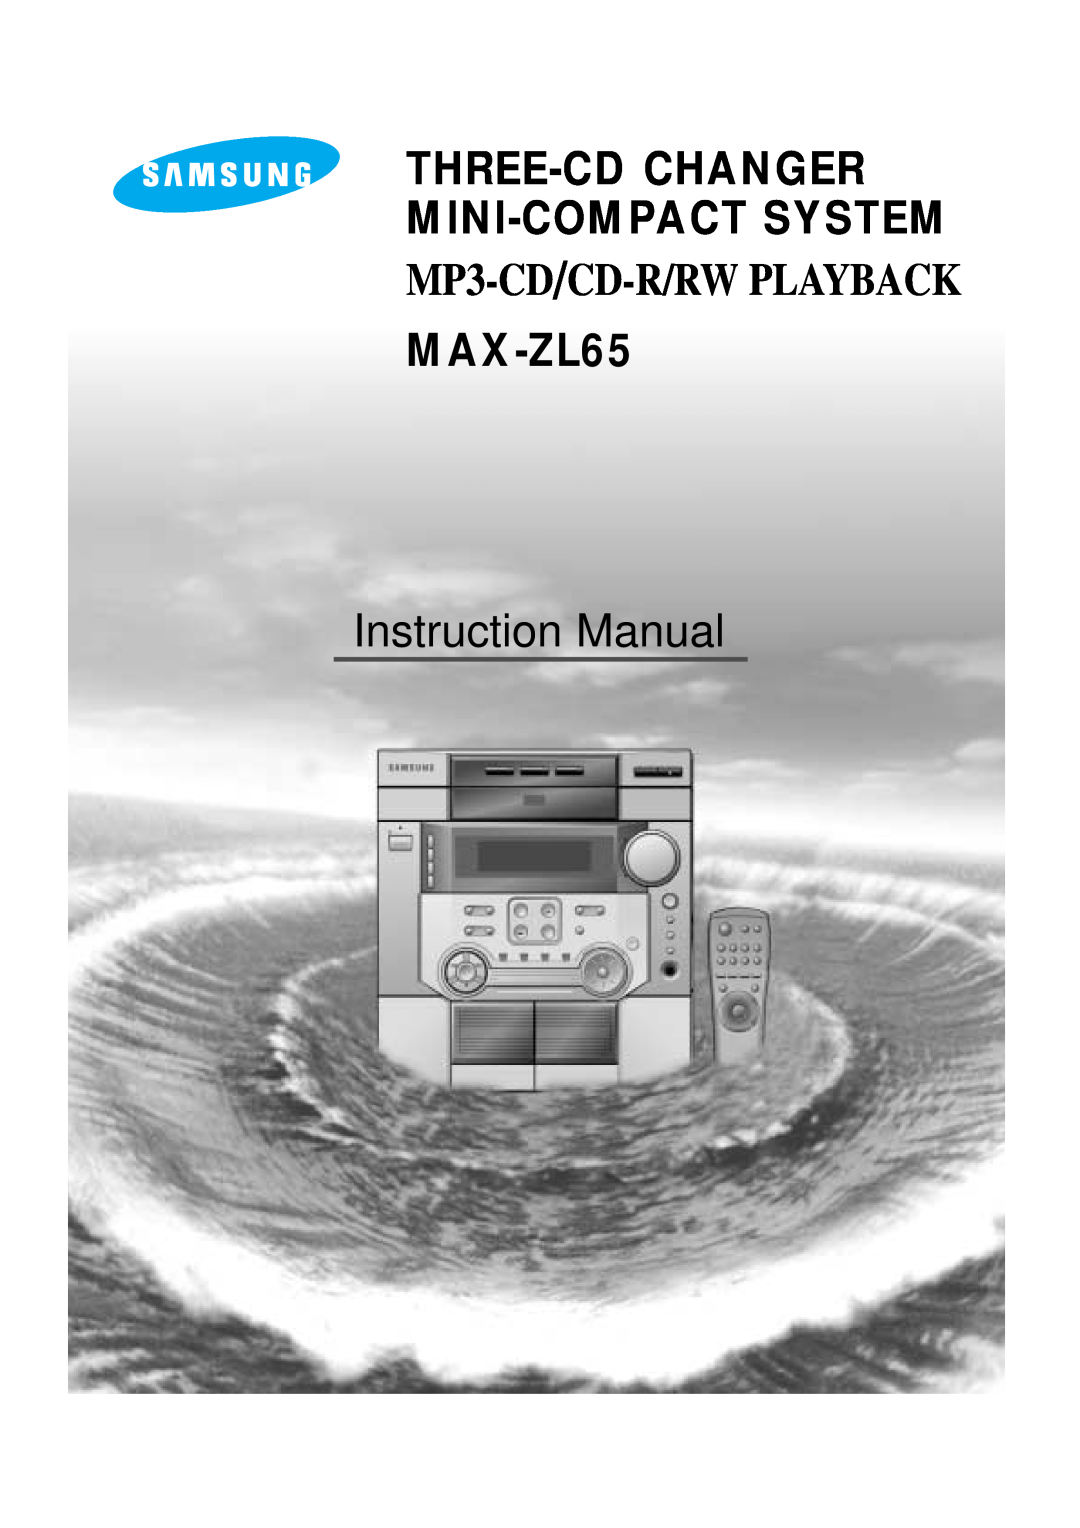 Samsung MAX-ZL65GBR instruction manual Three-Cd Changer Mini-Compact System, MP3-CD/CD-R/RW PLAYBACK 